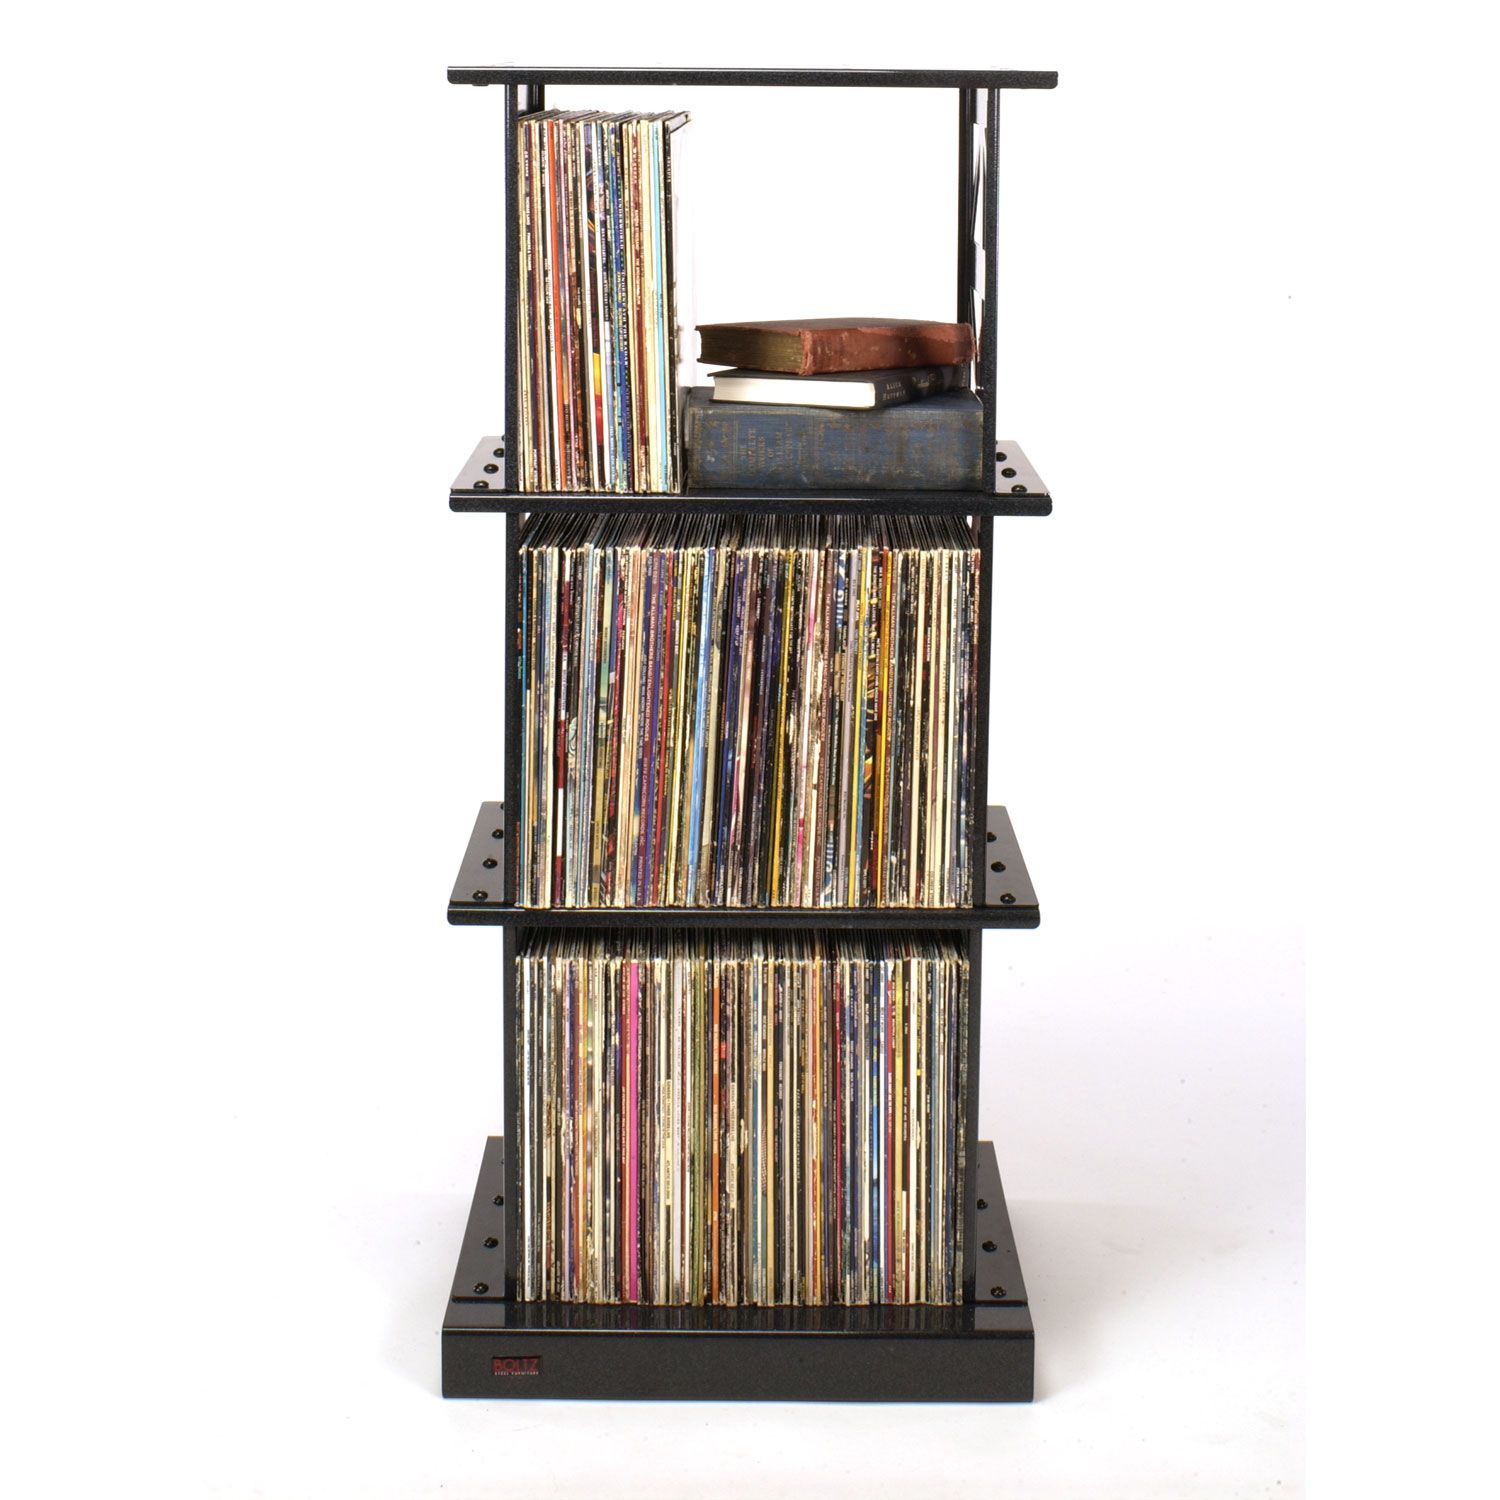 LP Album Storage - 3 Shelves, 270 LP Capacity